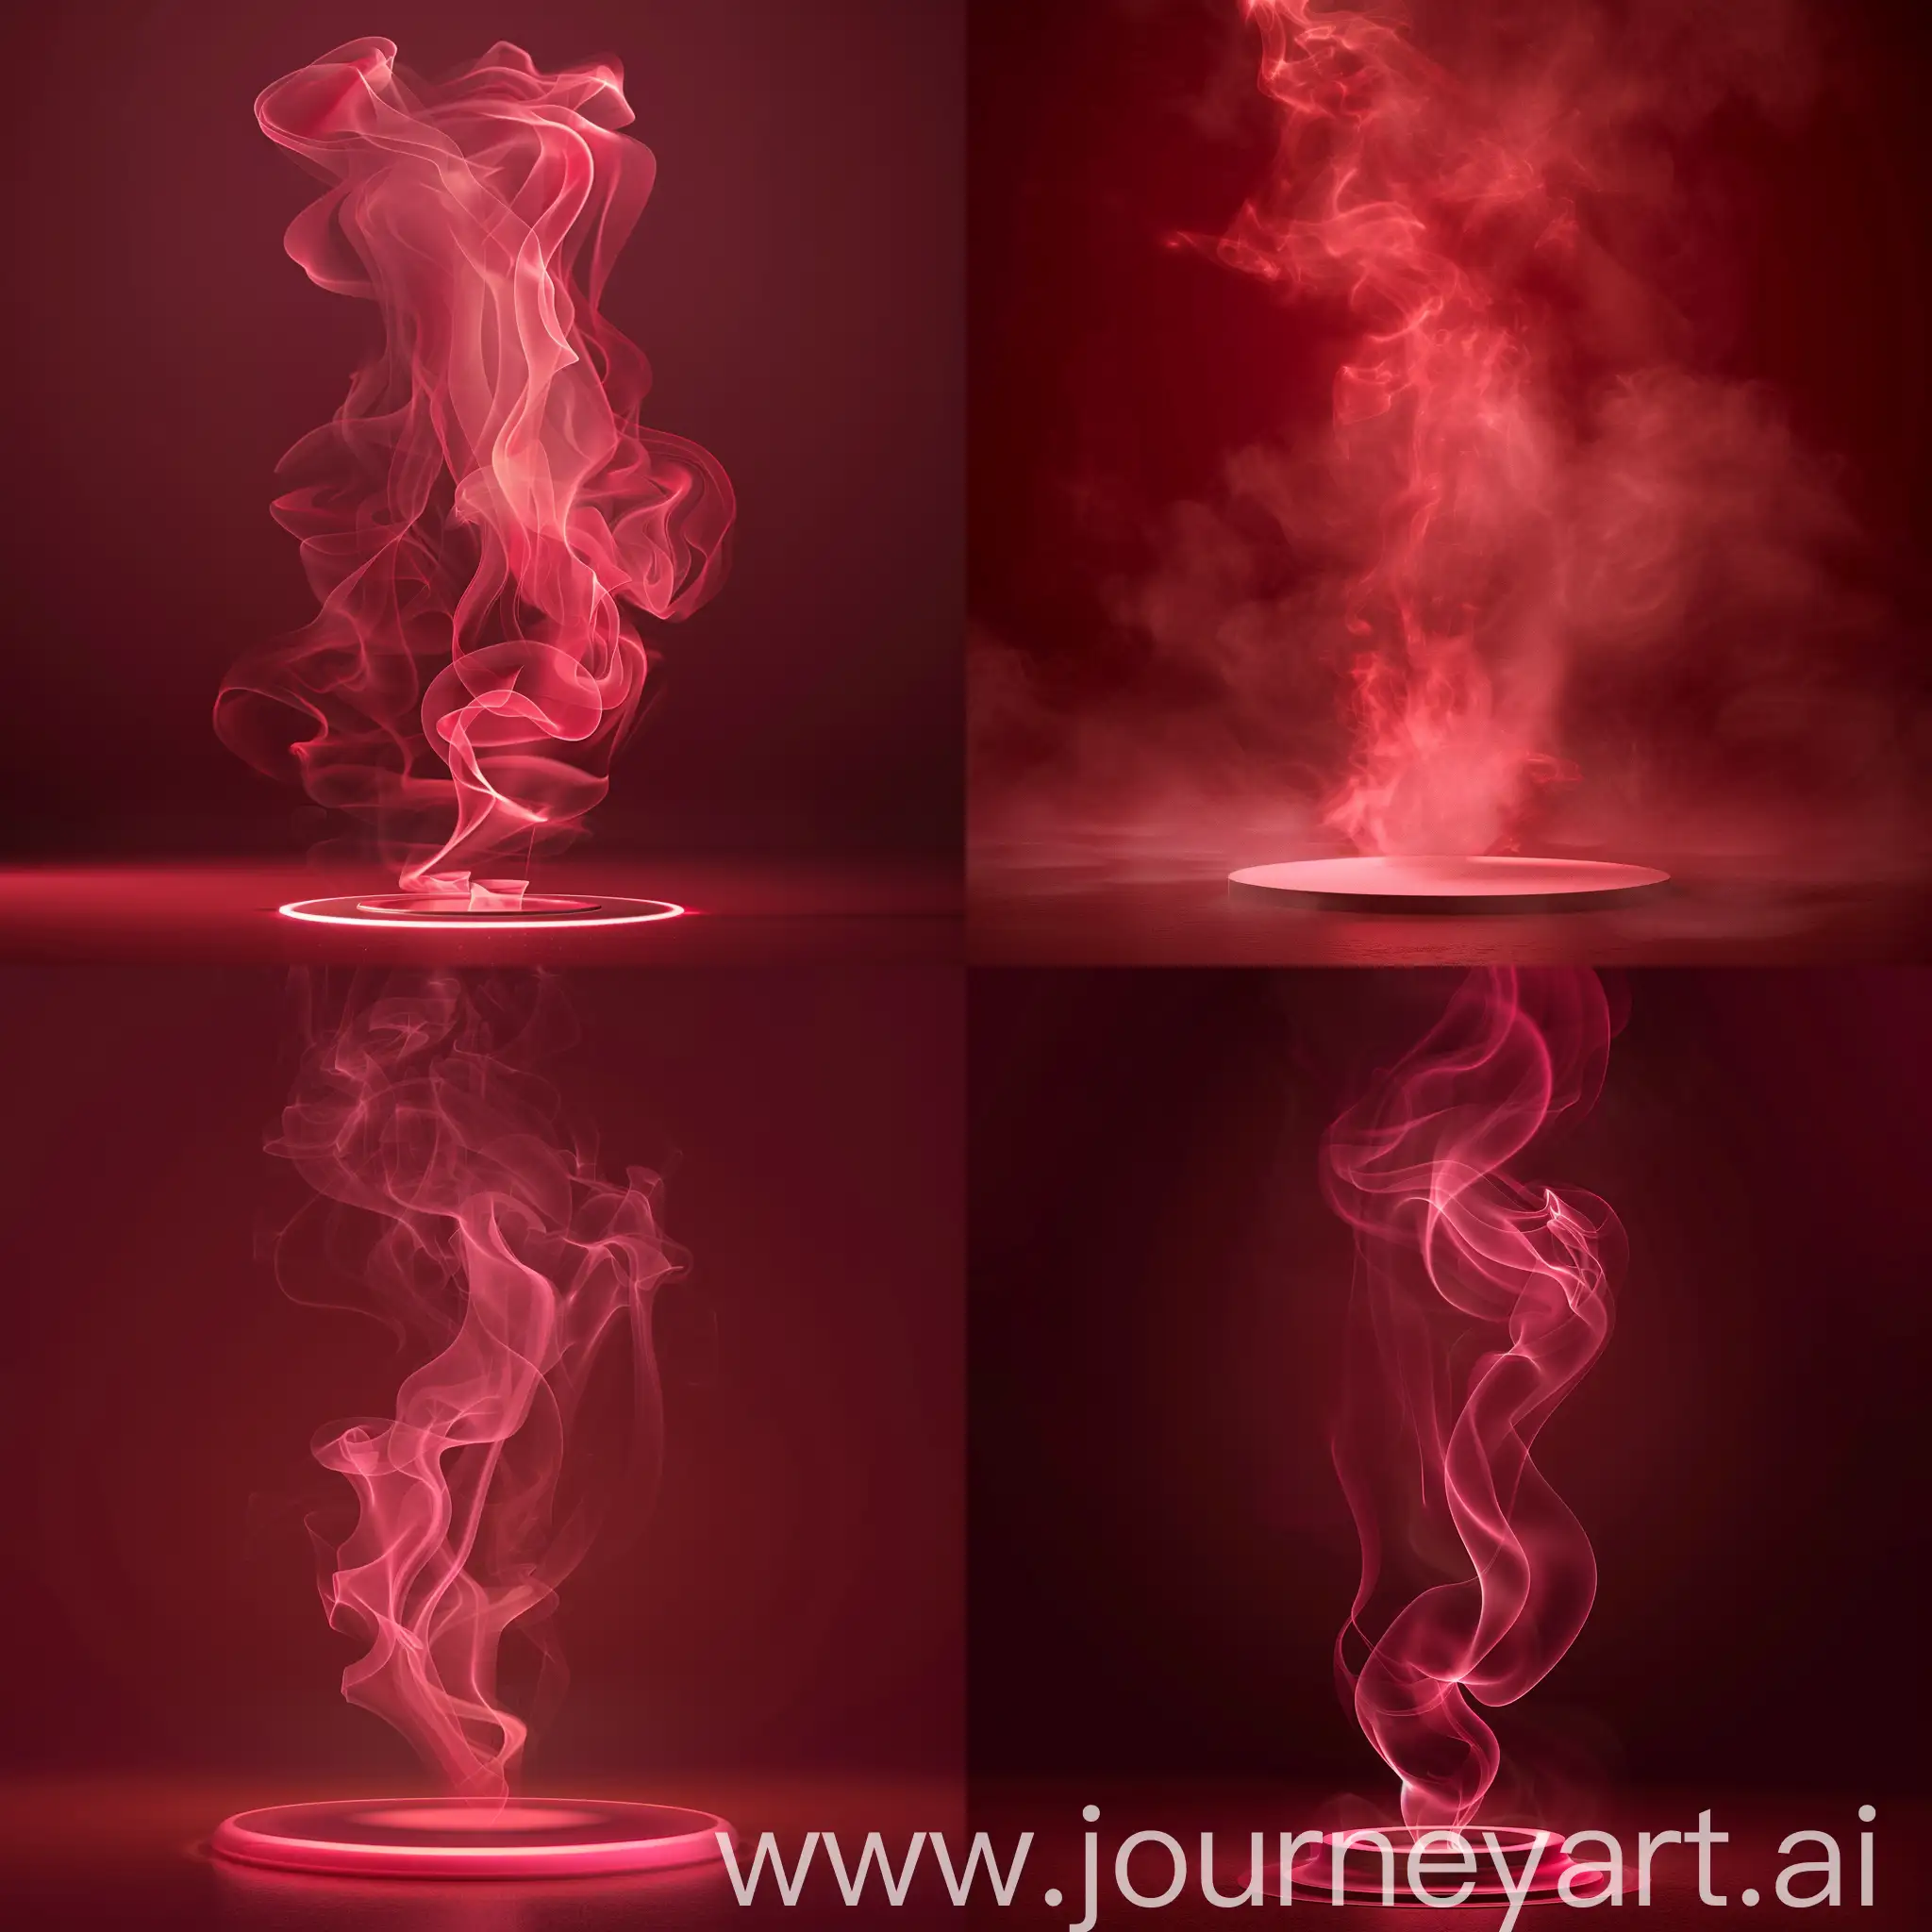 Vibrant-RedPink-Glowing-Smoke-on-Dark-Red-Background